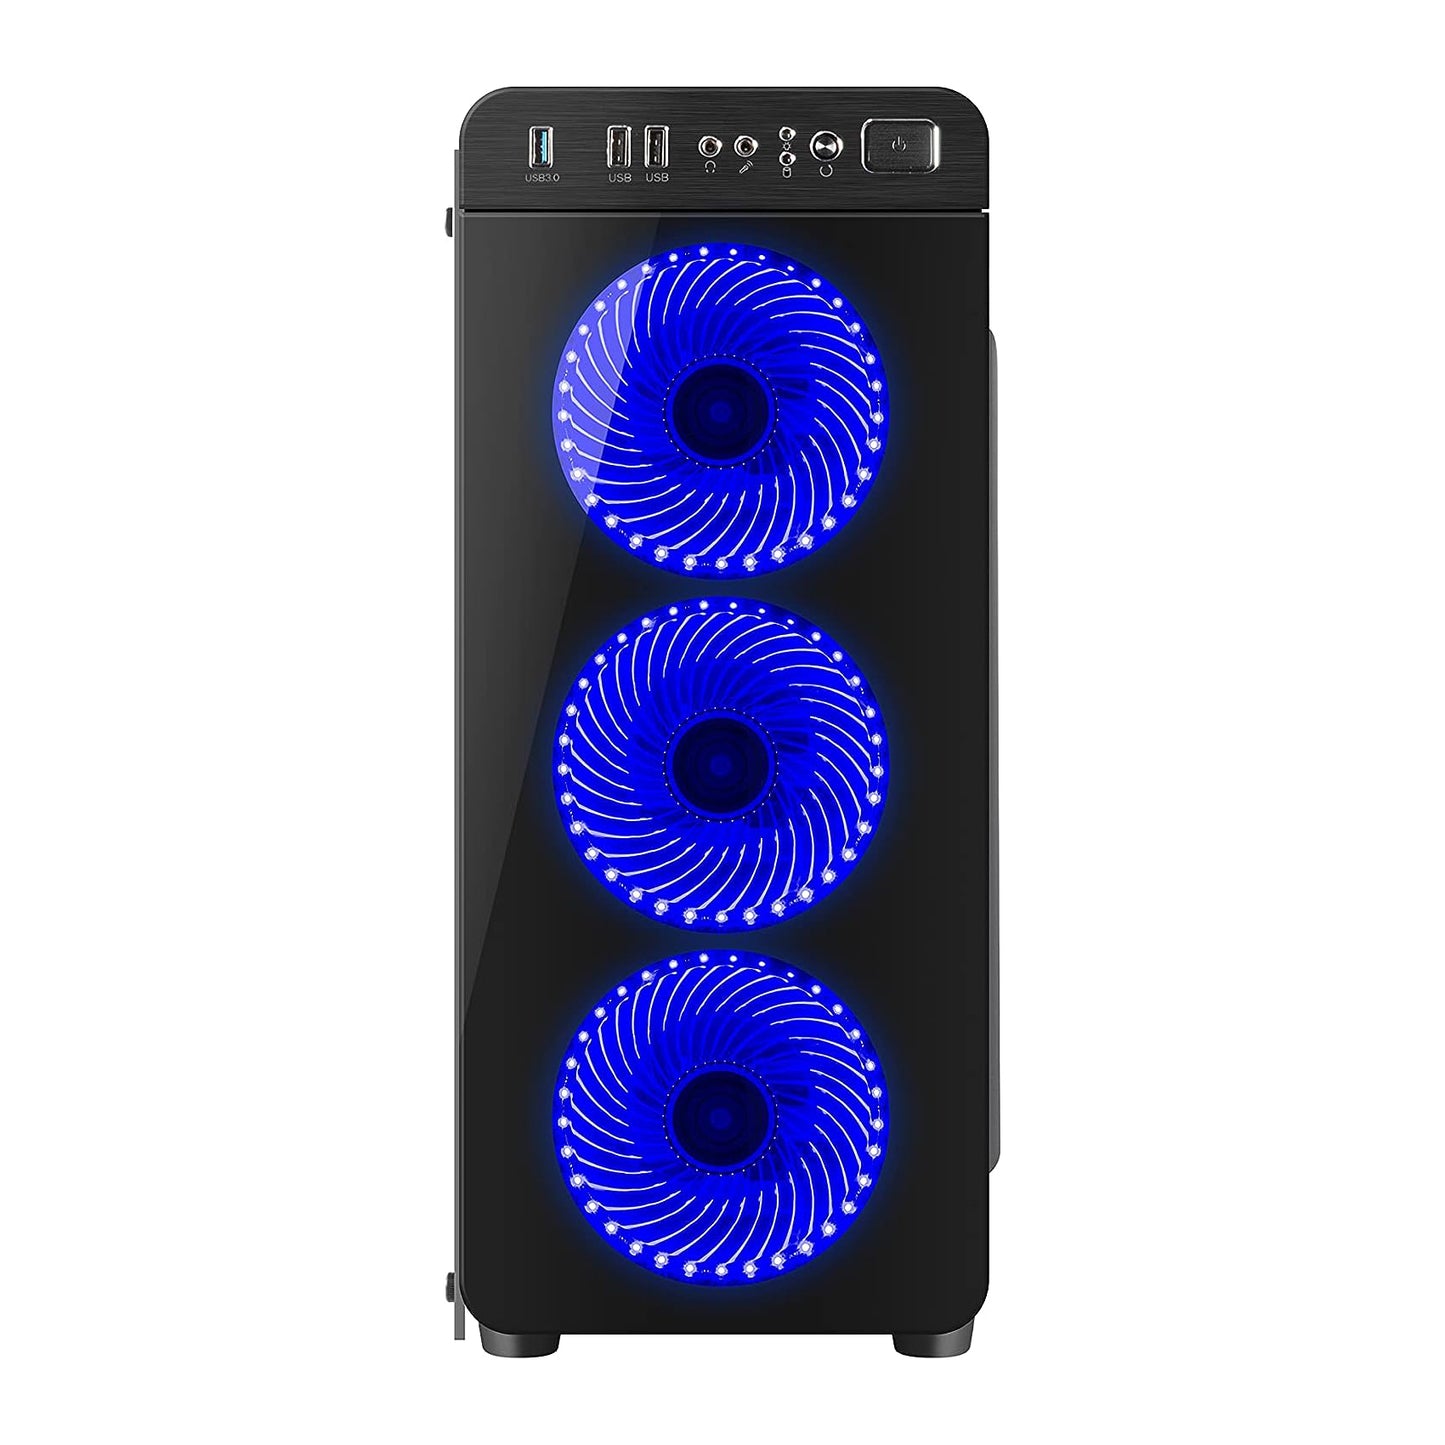 Genesis Irid 300 Core i7-12700 Rtx 3070 | Blue | Gaming Desktop (Brand New)